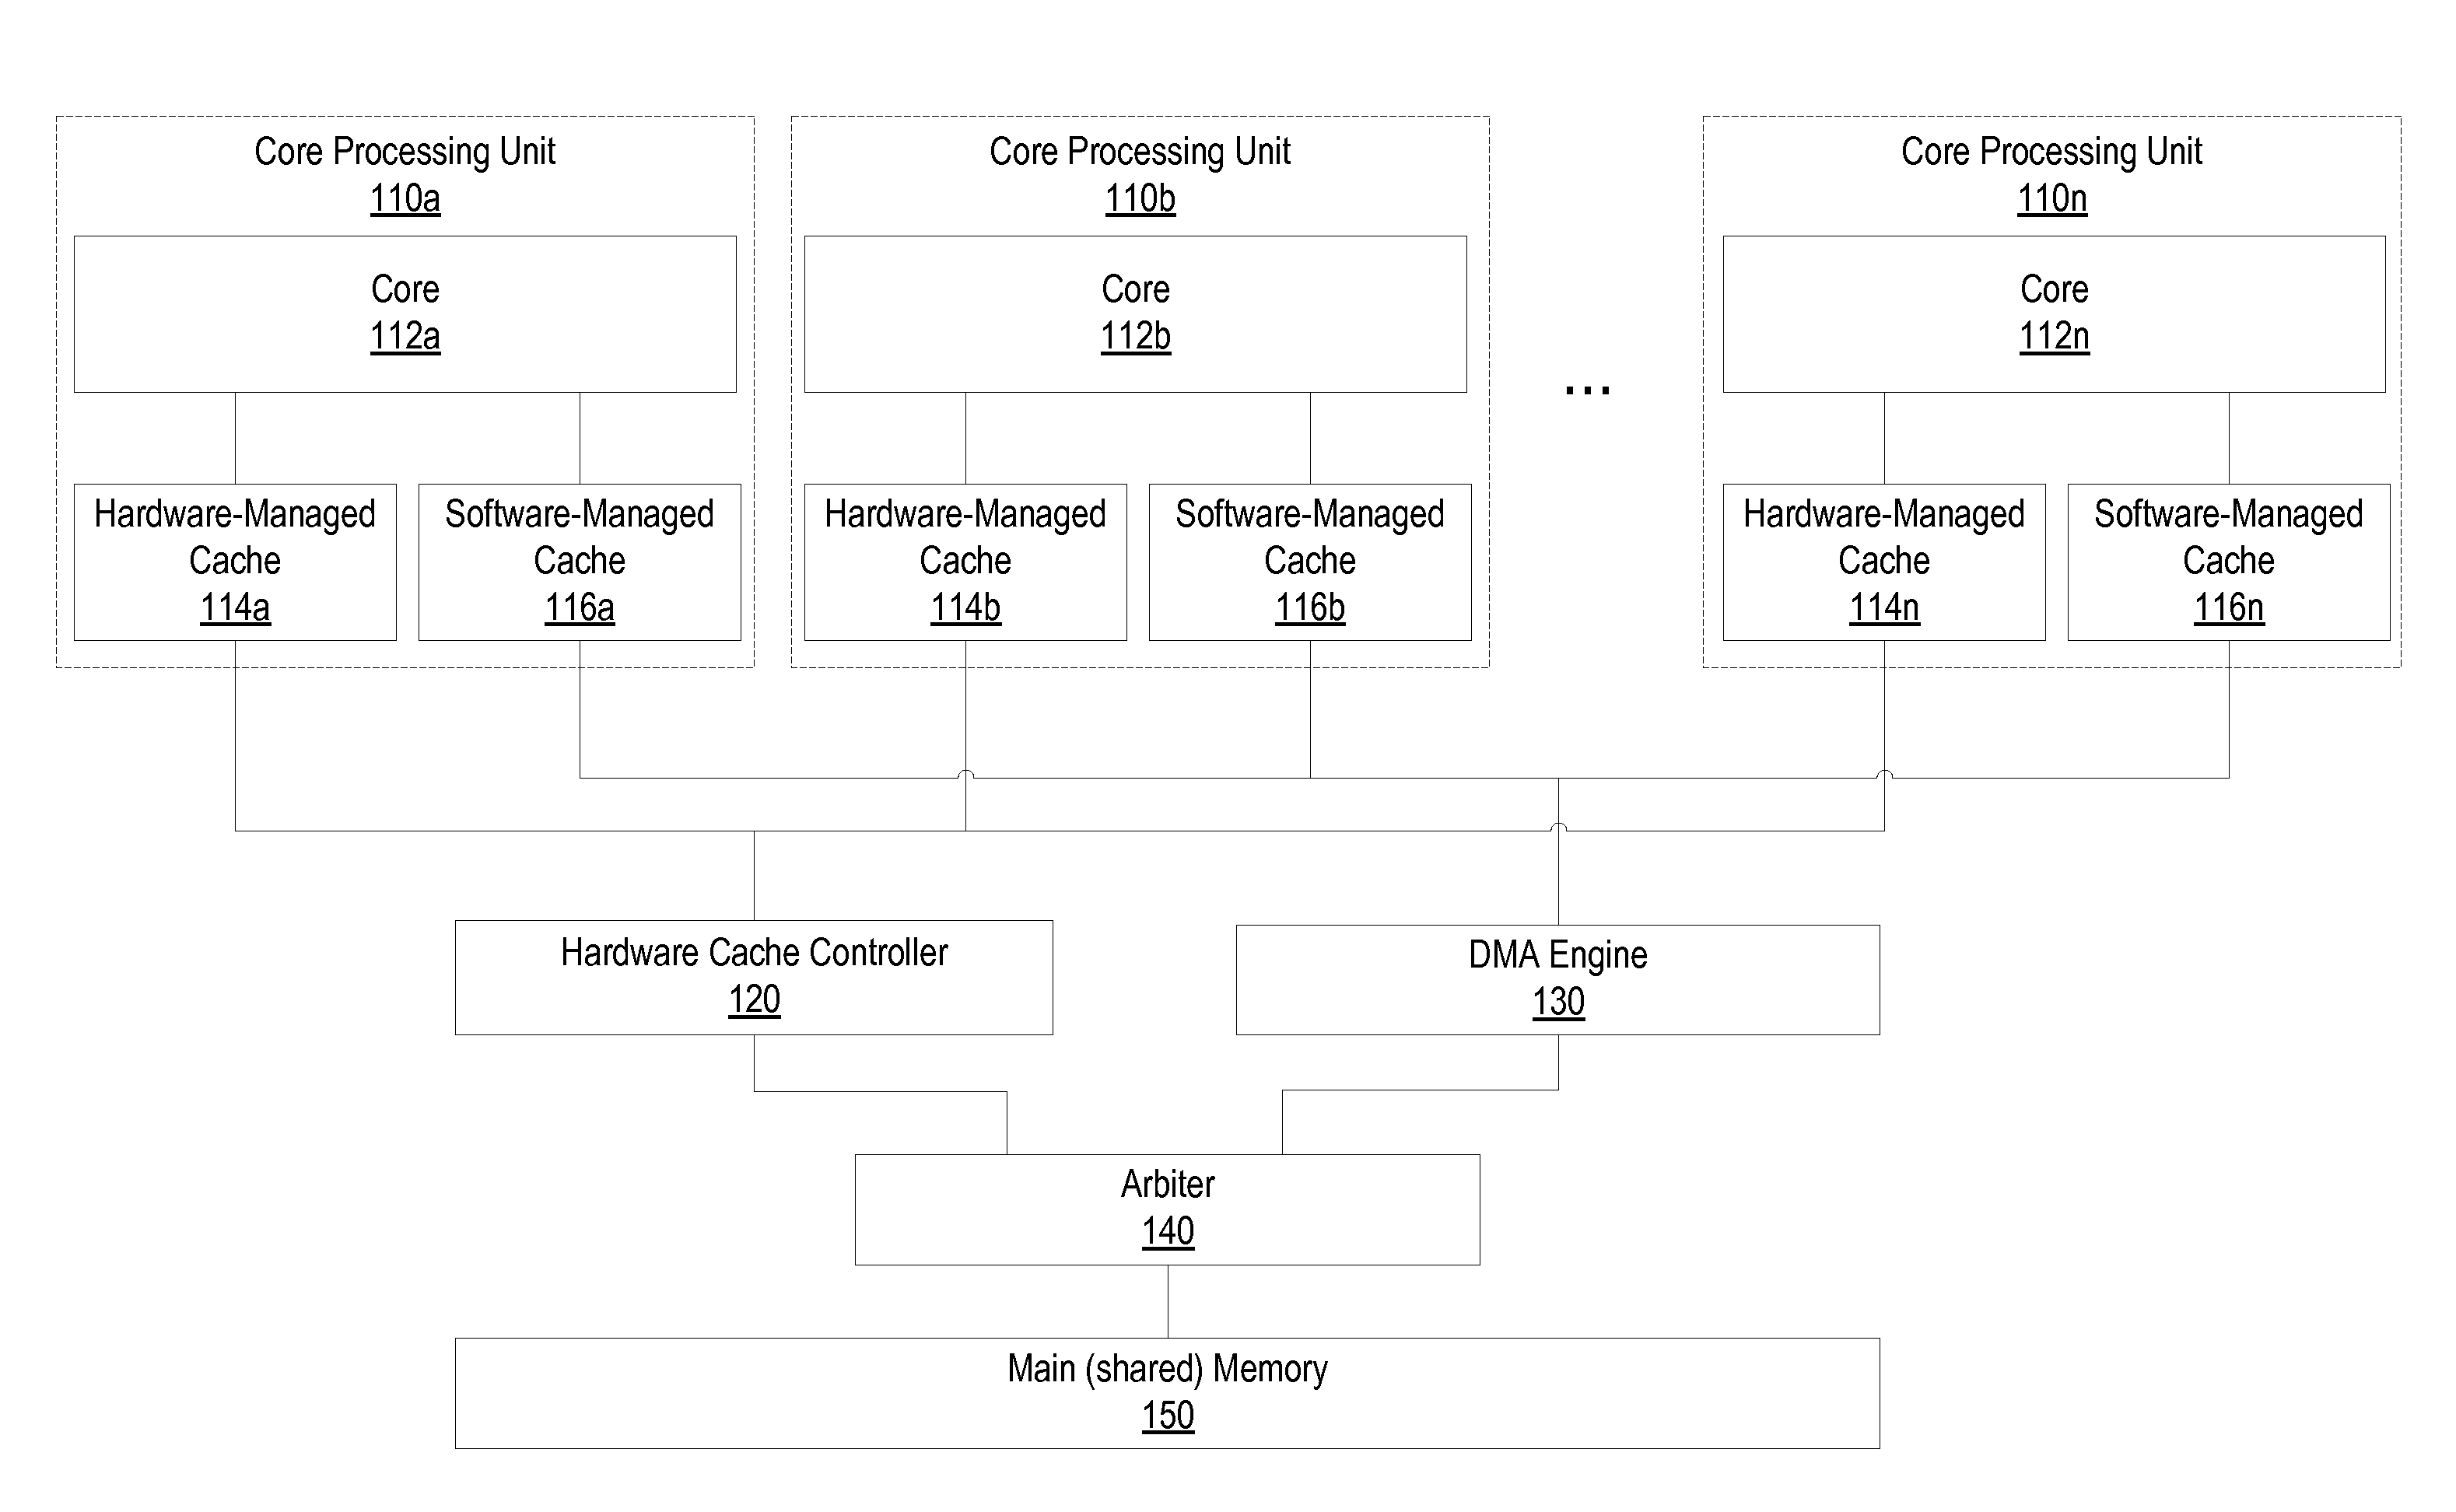 Memory coherence in a multi-core, multi-level, heterogeneous computer architecture